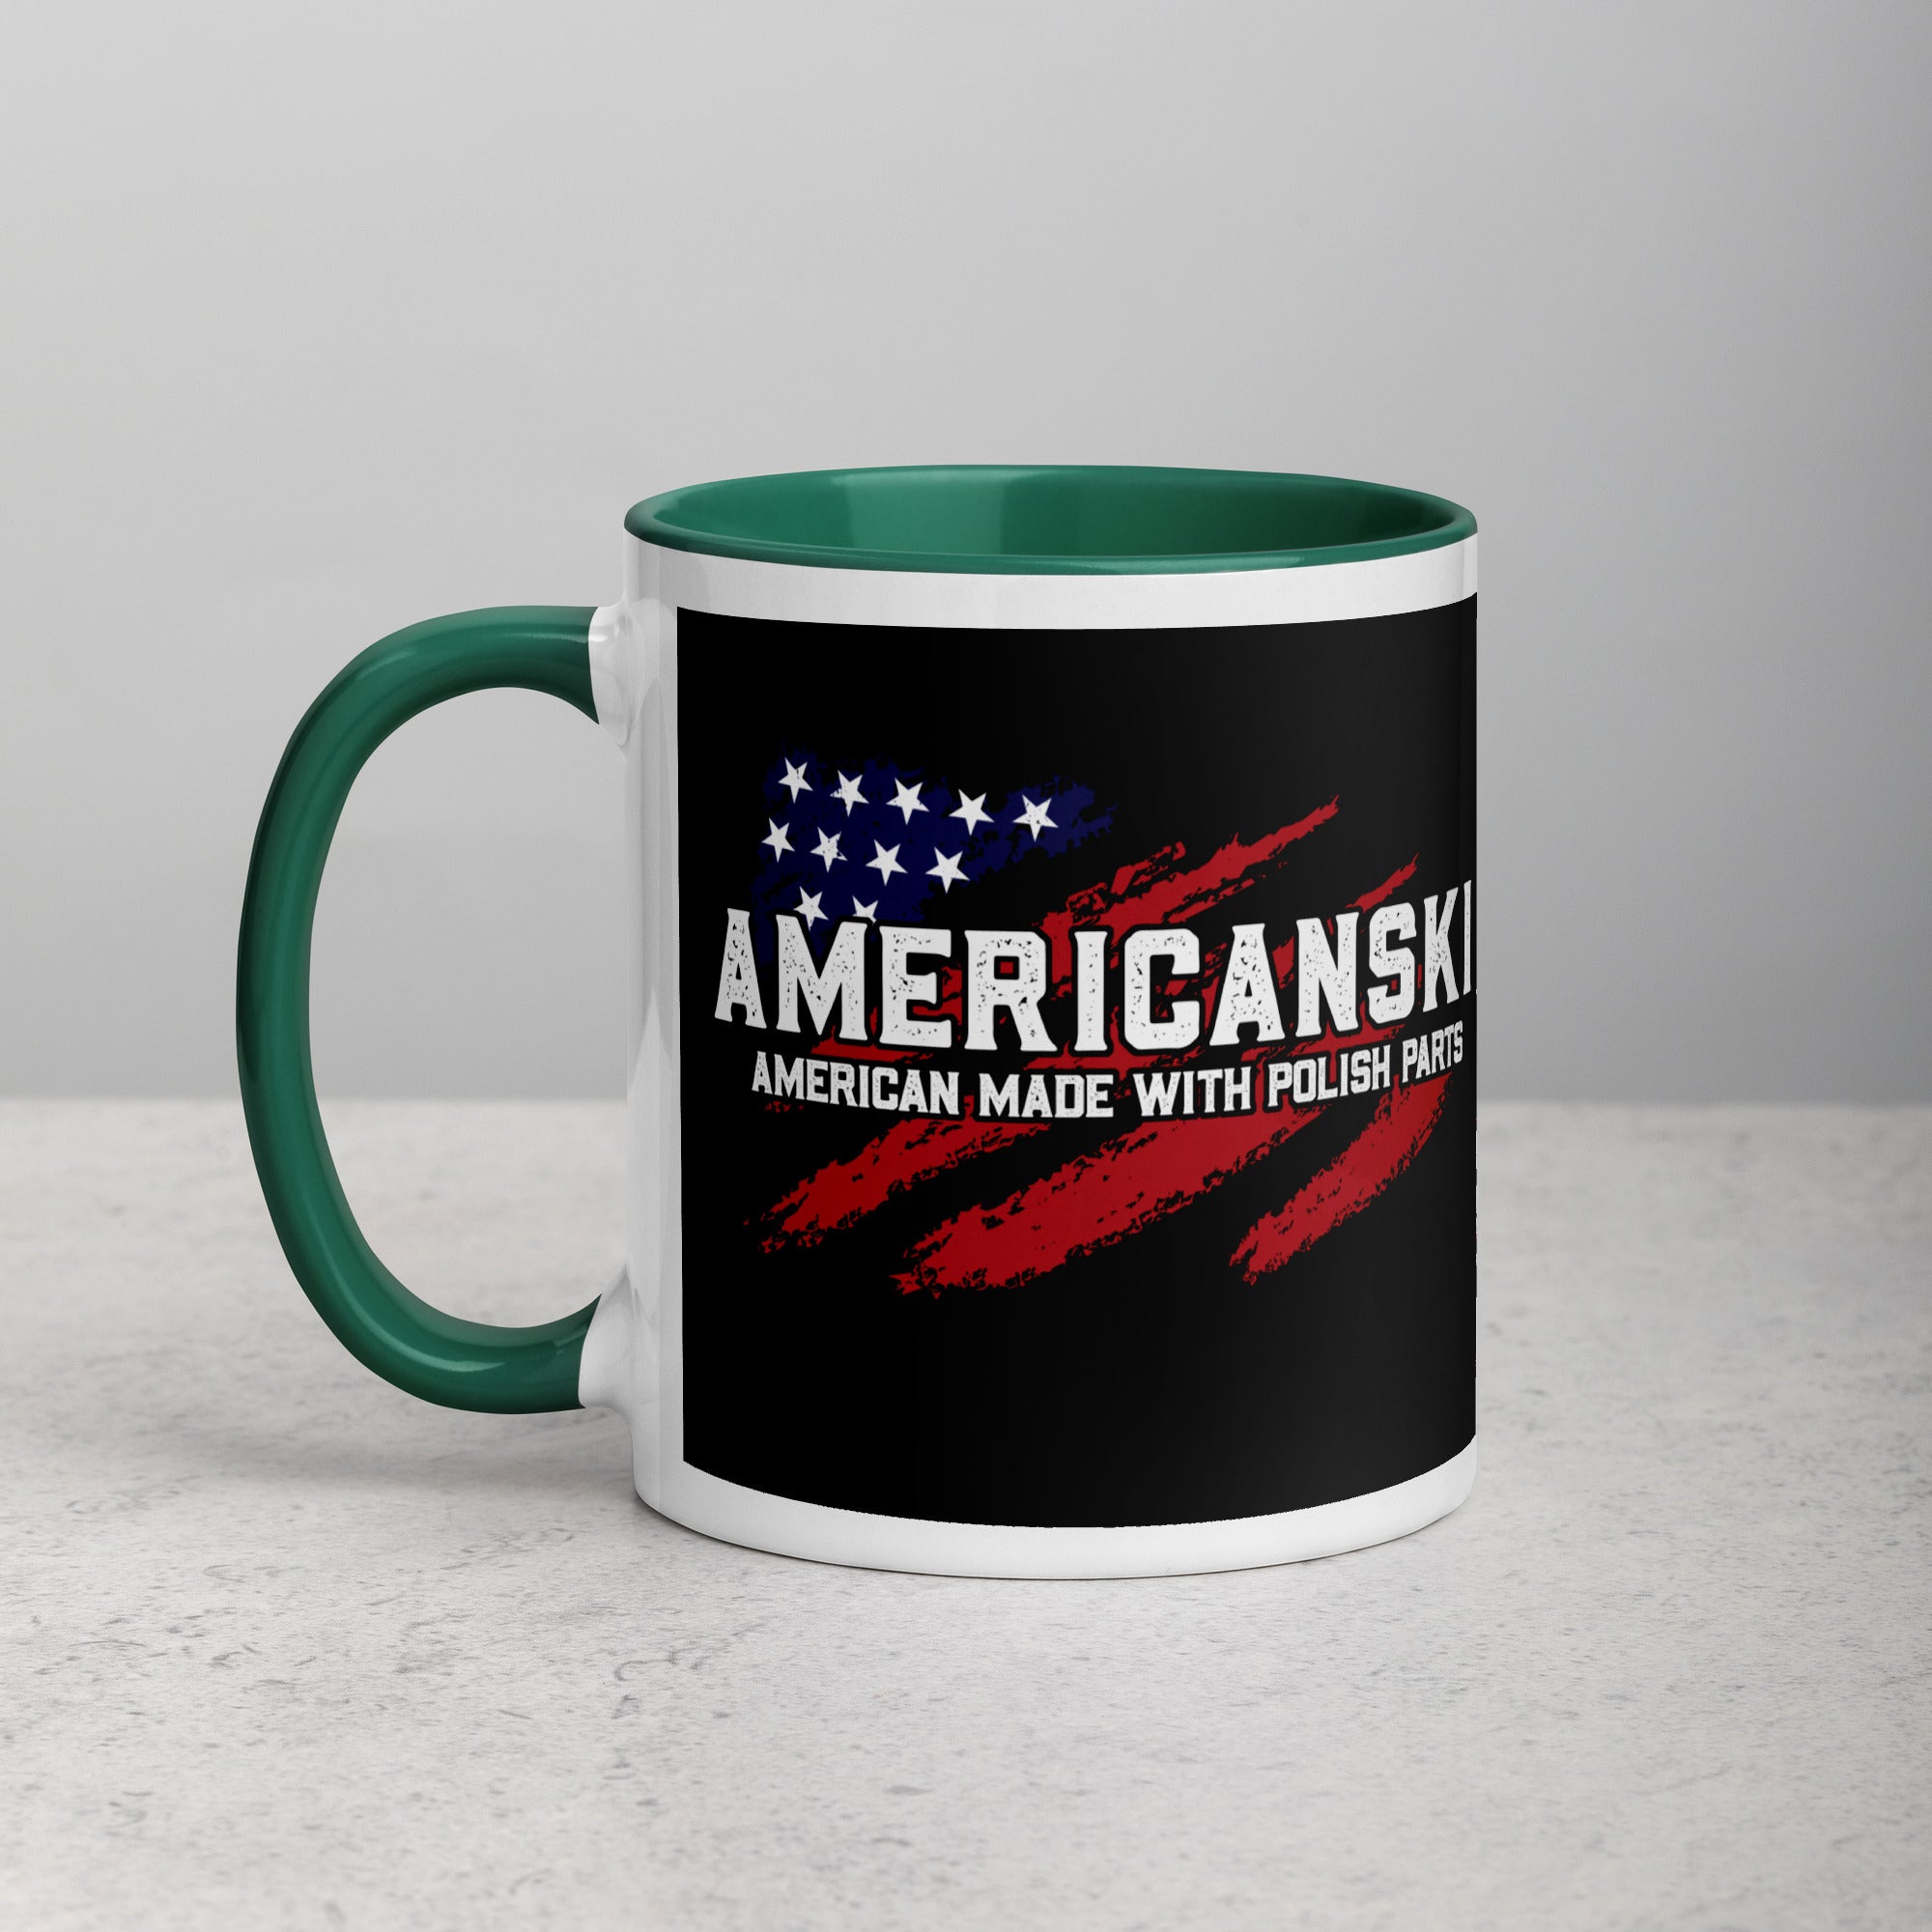 Americanski Coffee Mug with Color Inside  Polish Shirt Store Dark green 11 oz 